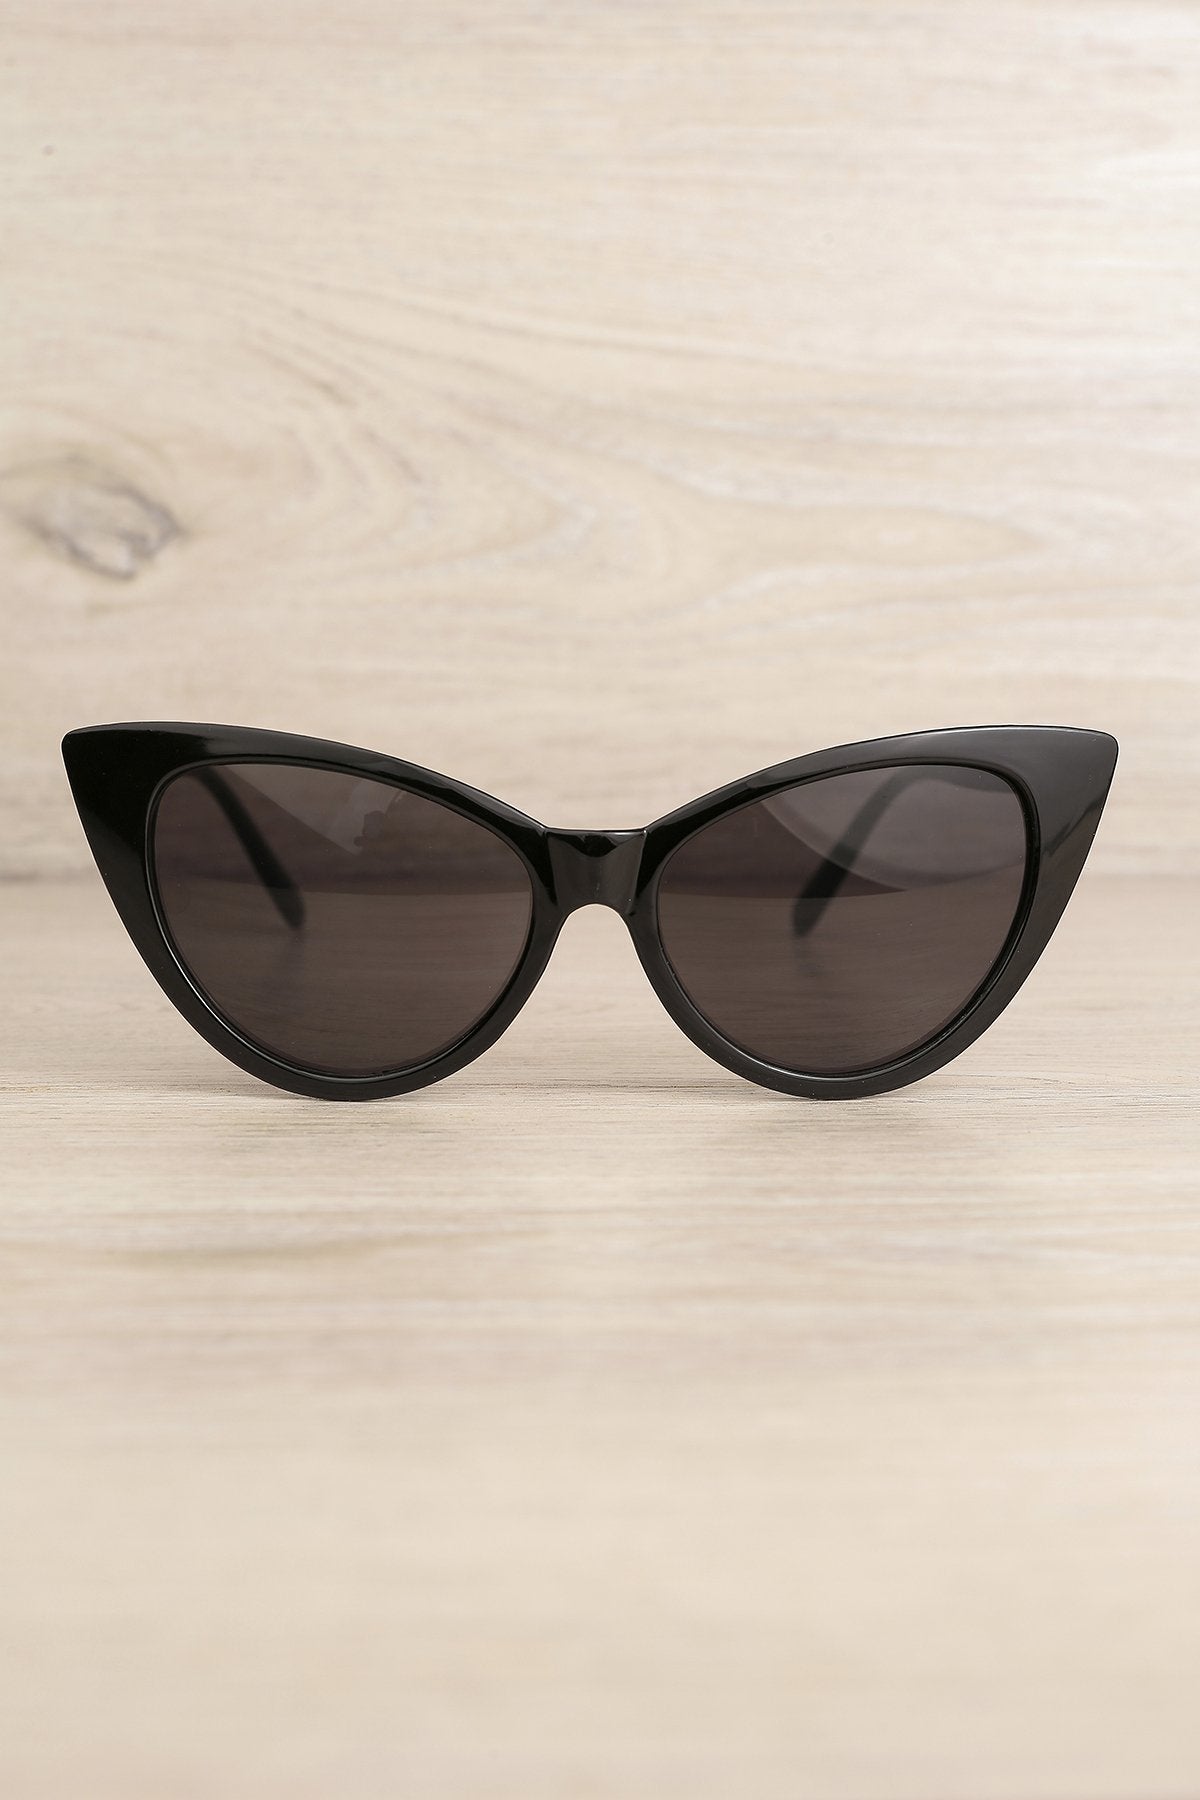 Black Cat Eye Sunglasses - ZAPAKA